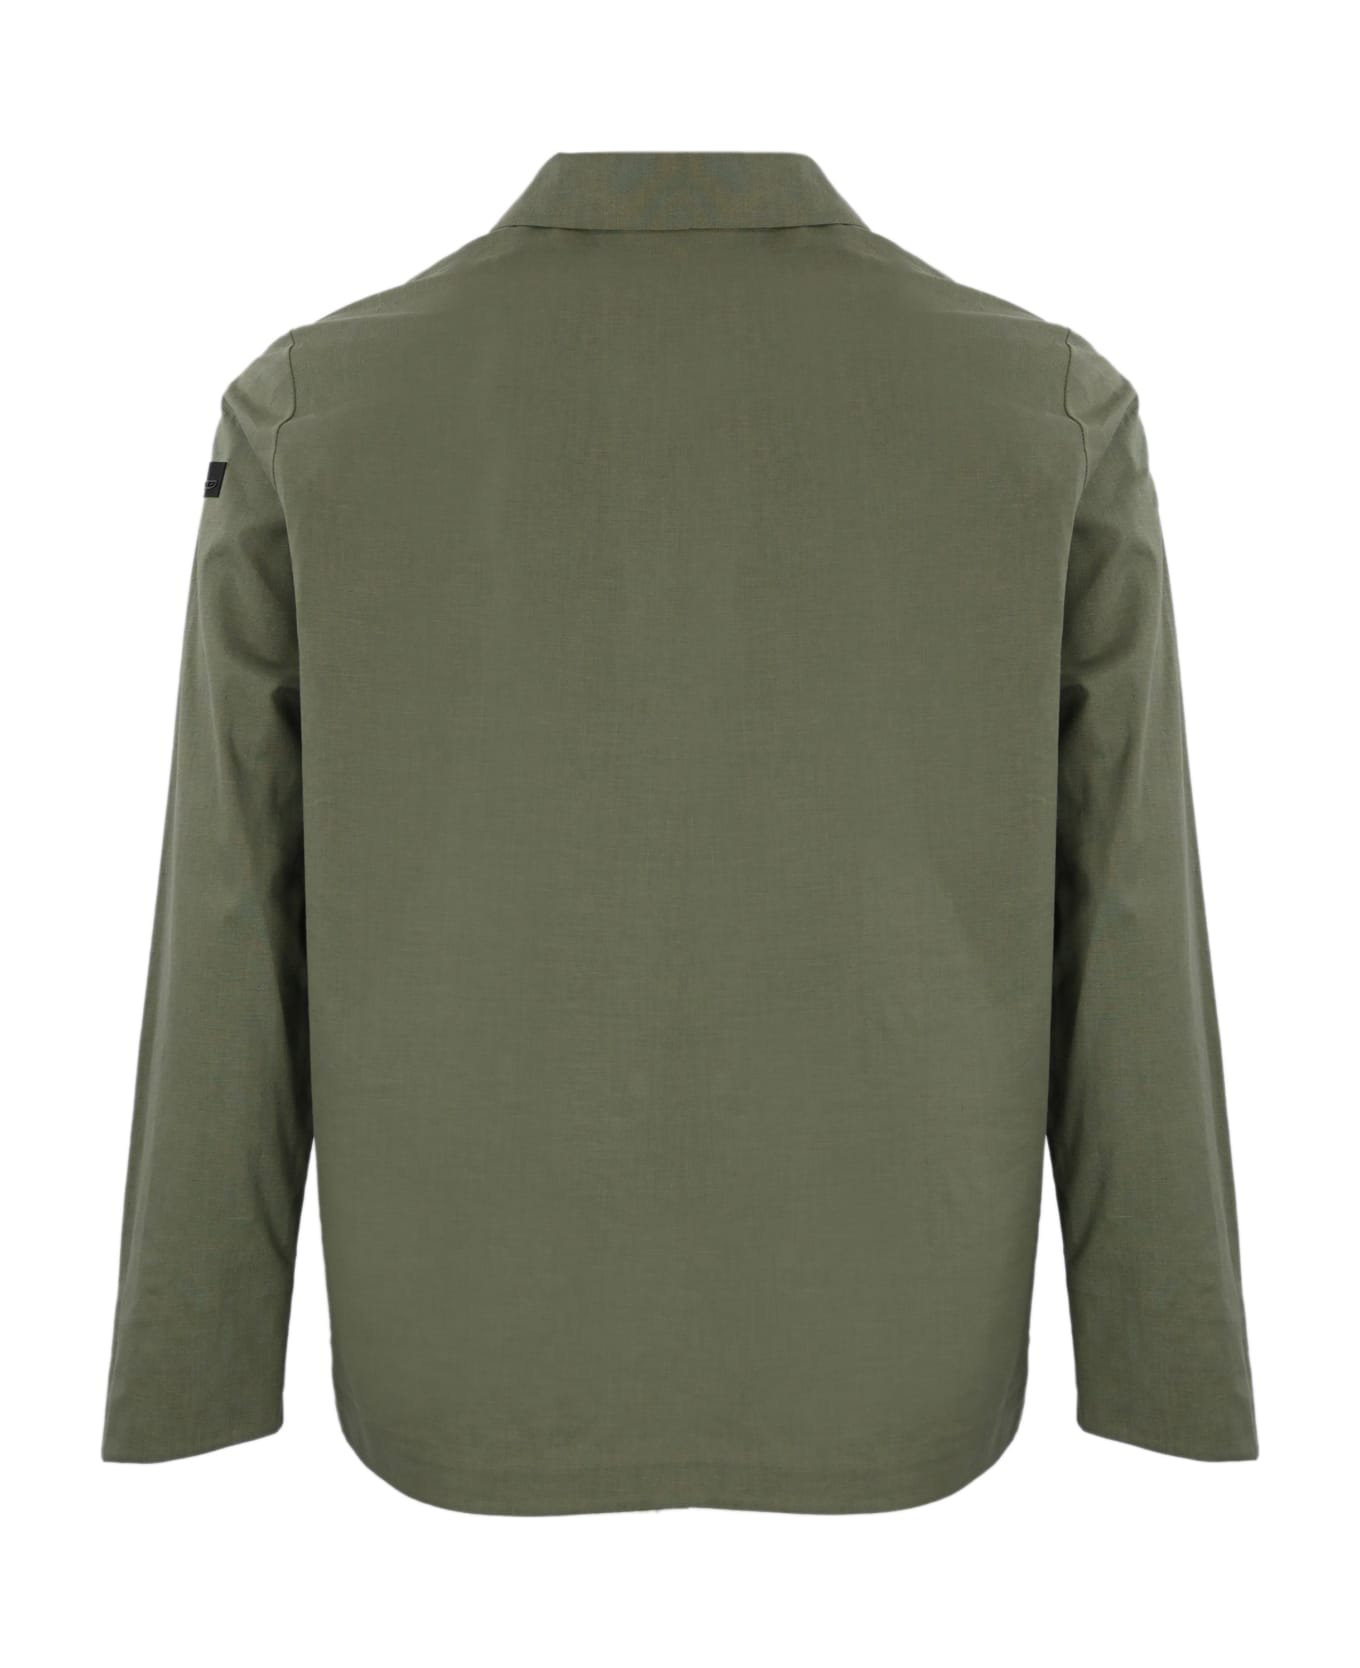 RRD - Roberto Ricci Design Terzilino Shirt Jacket - Green